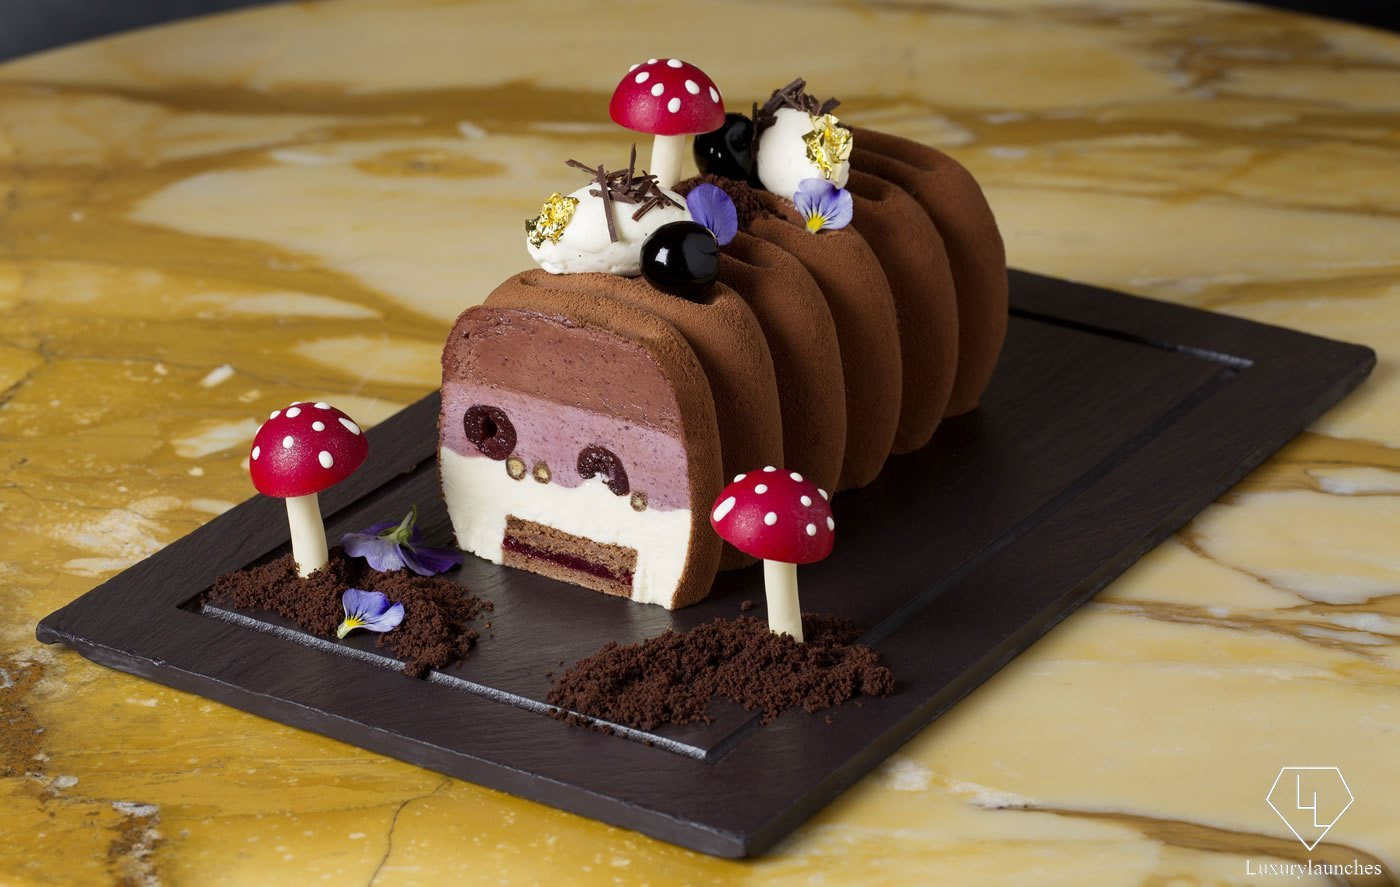 Rainforest Cafe Desserts Menu
 New dessert tasting menu launched at Hotel Café Royal’s